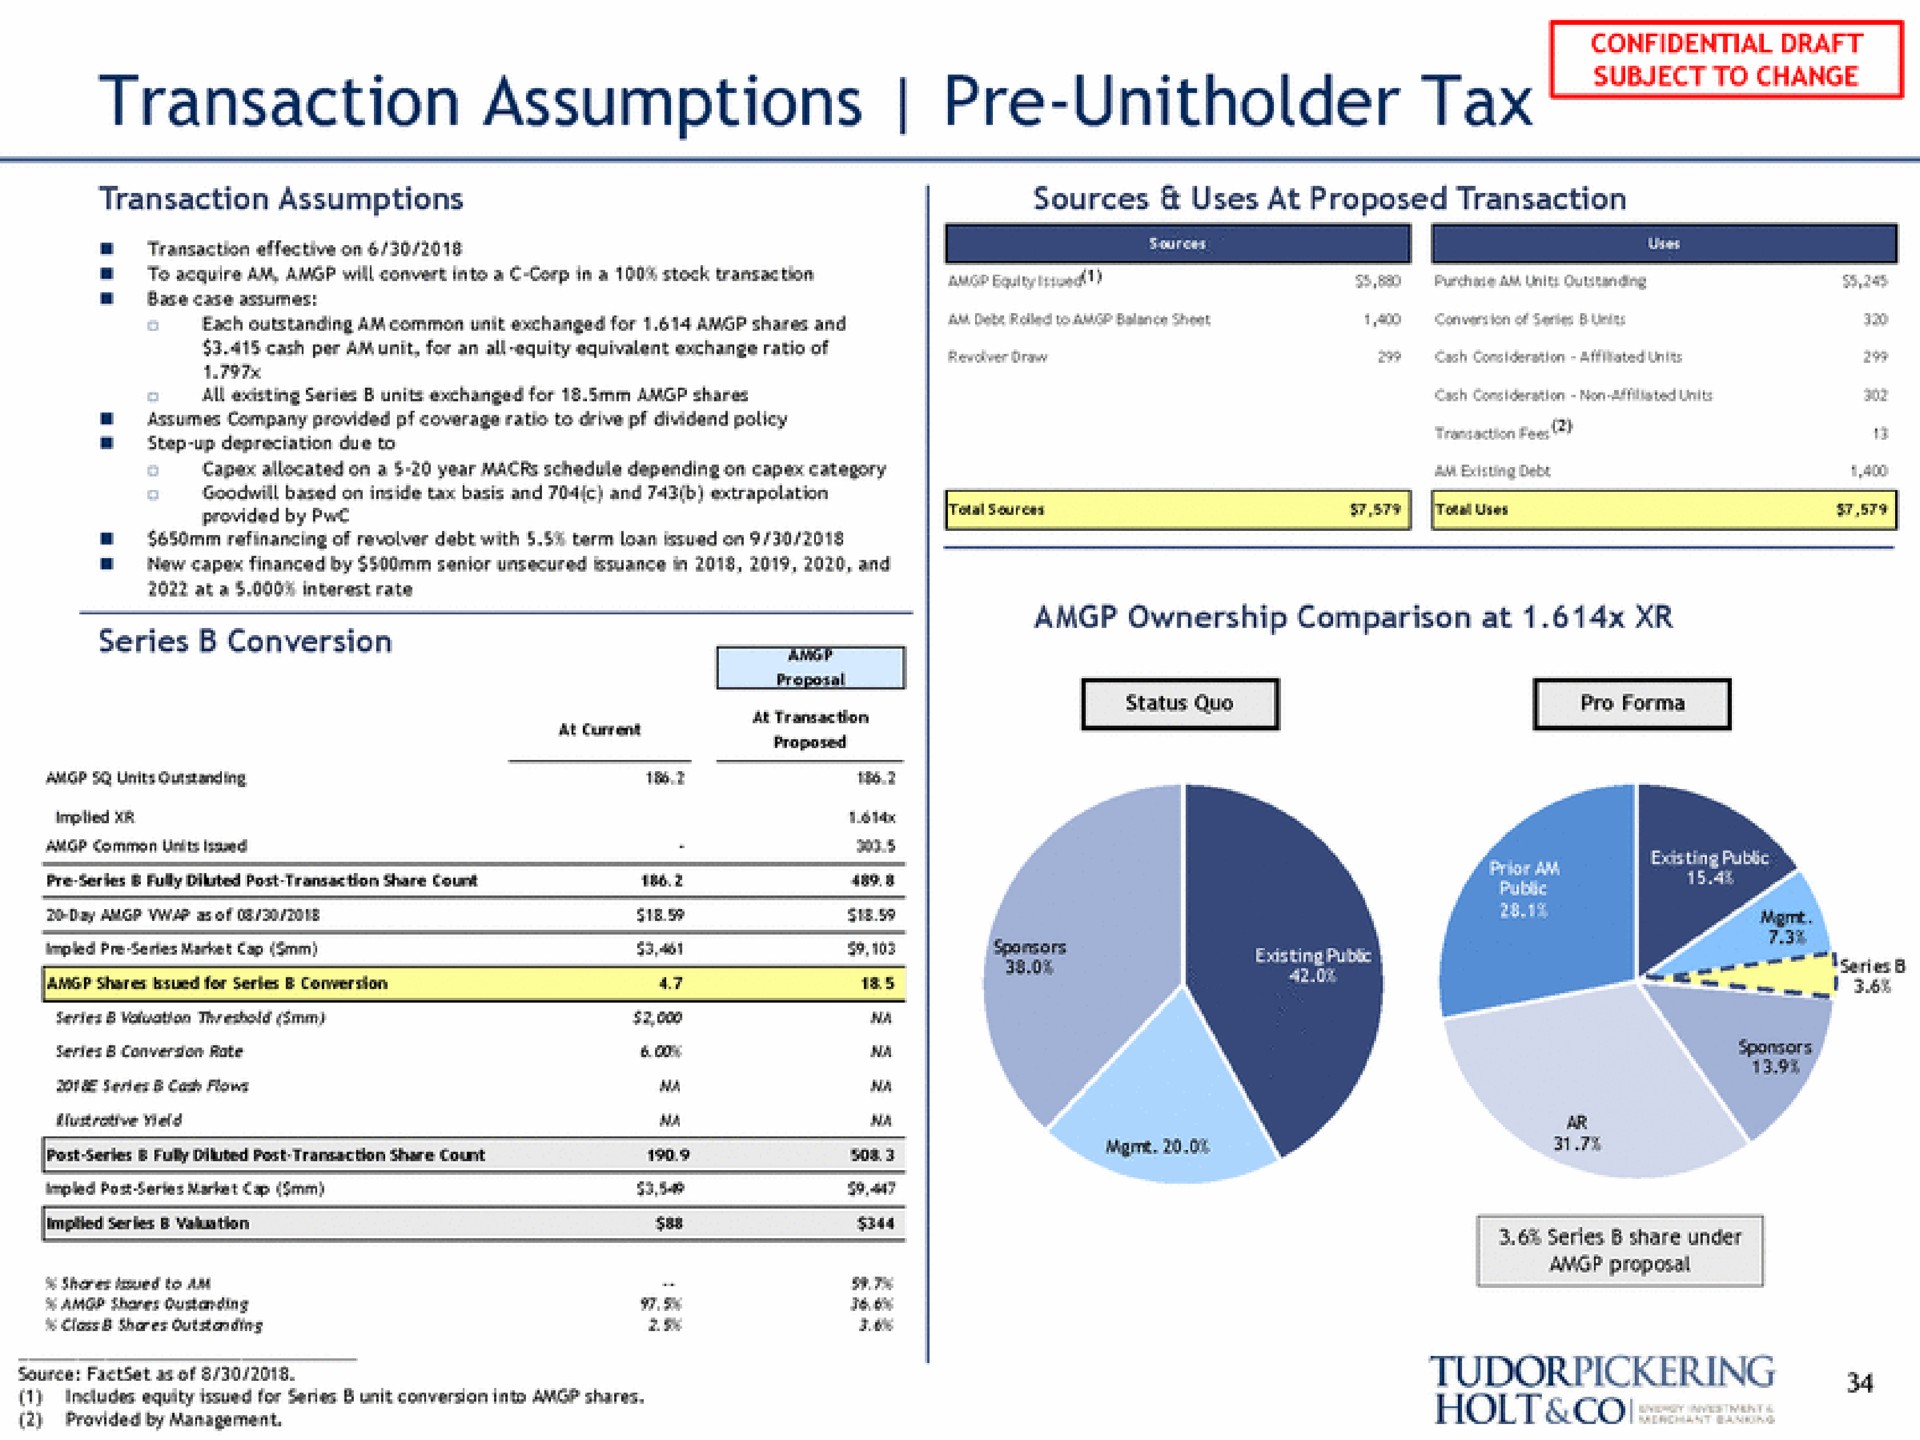 transaction assumptions tax | Tudor, Pickering, Holt & Co